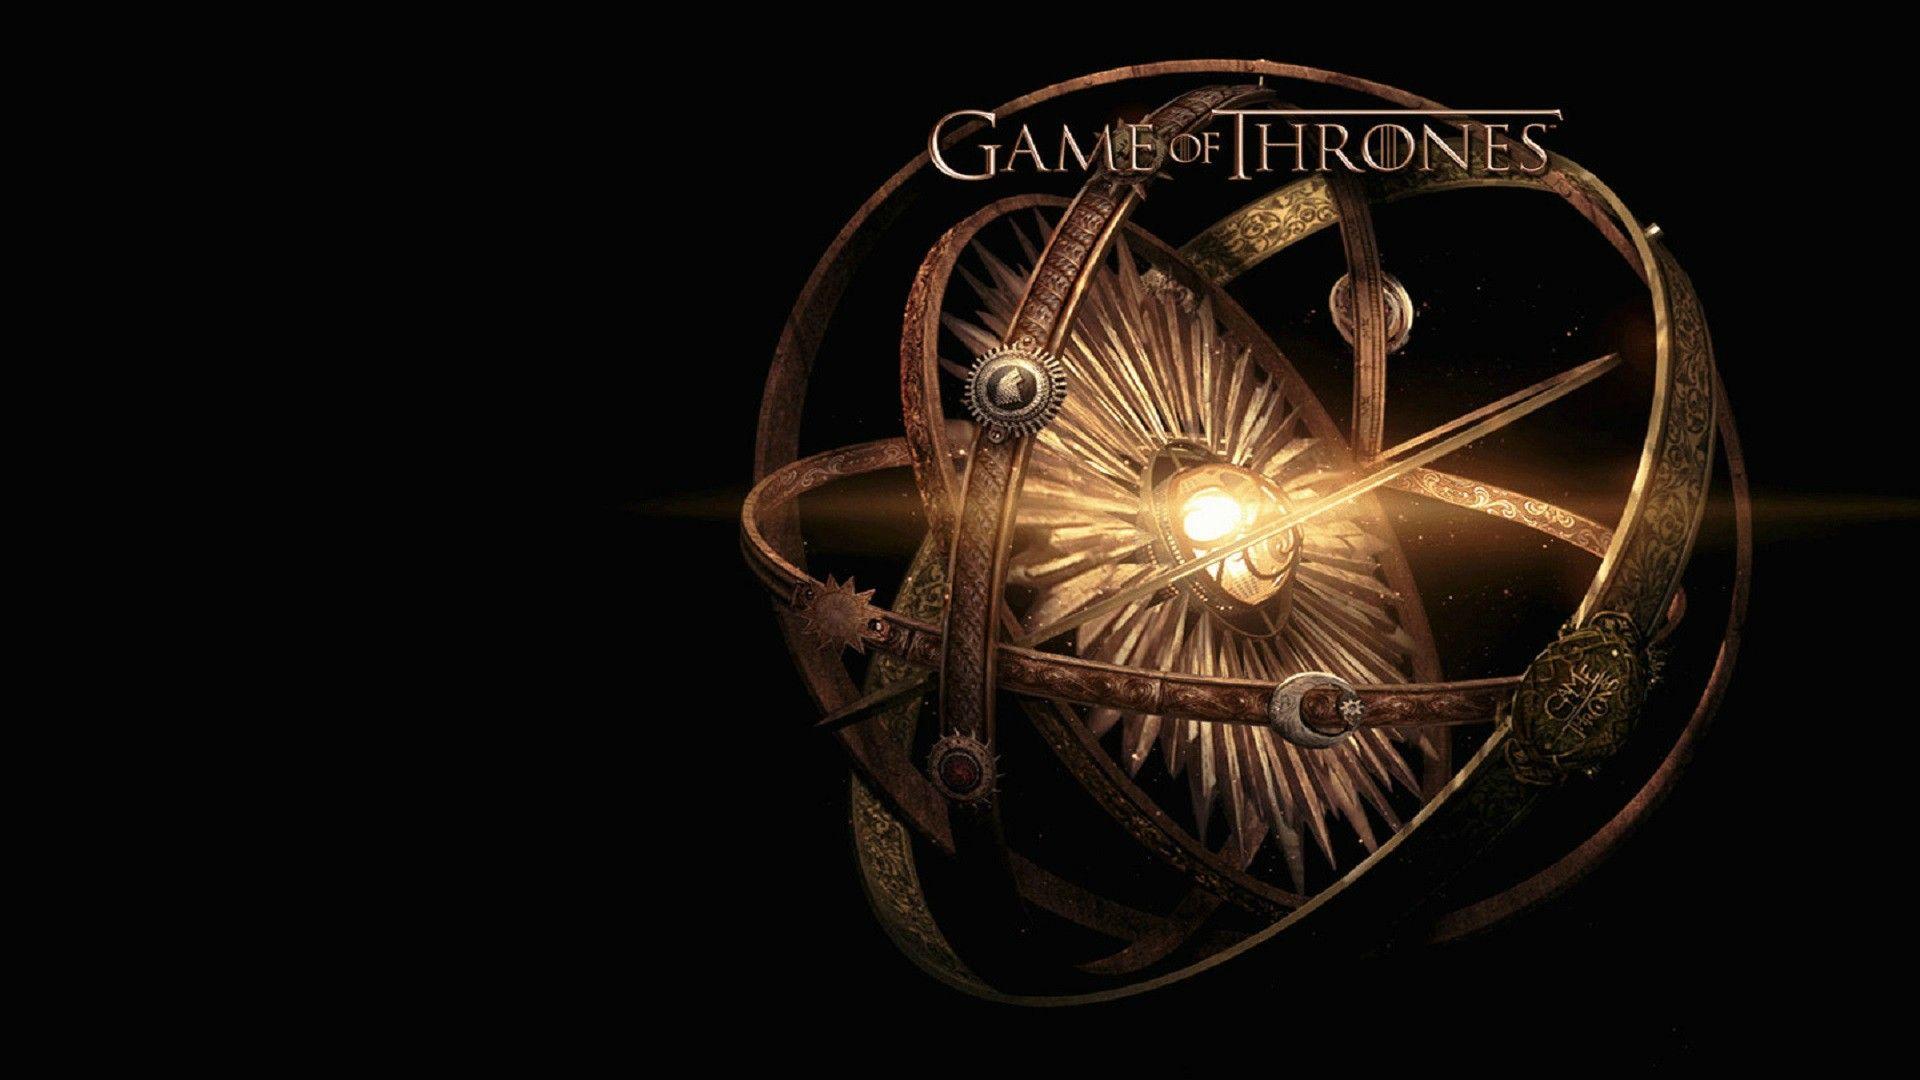  4K  HD Wallpaper  Of Game  Of Thrones  Season  8  Season  7 